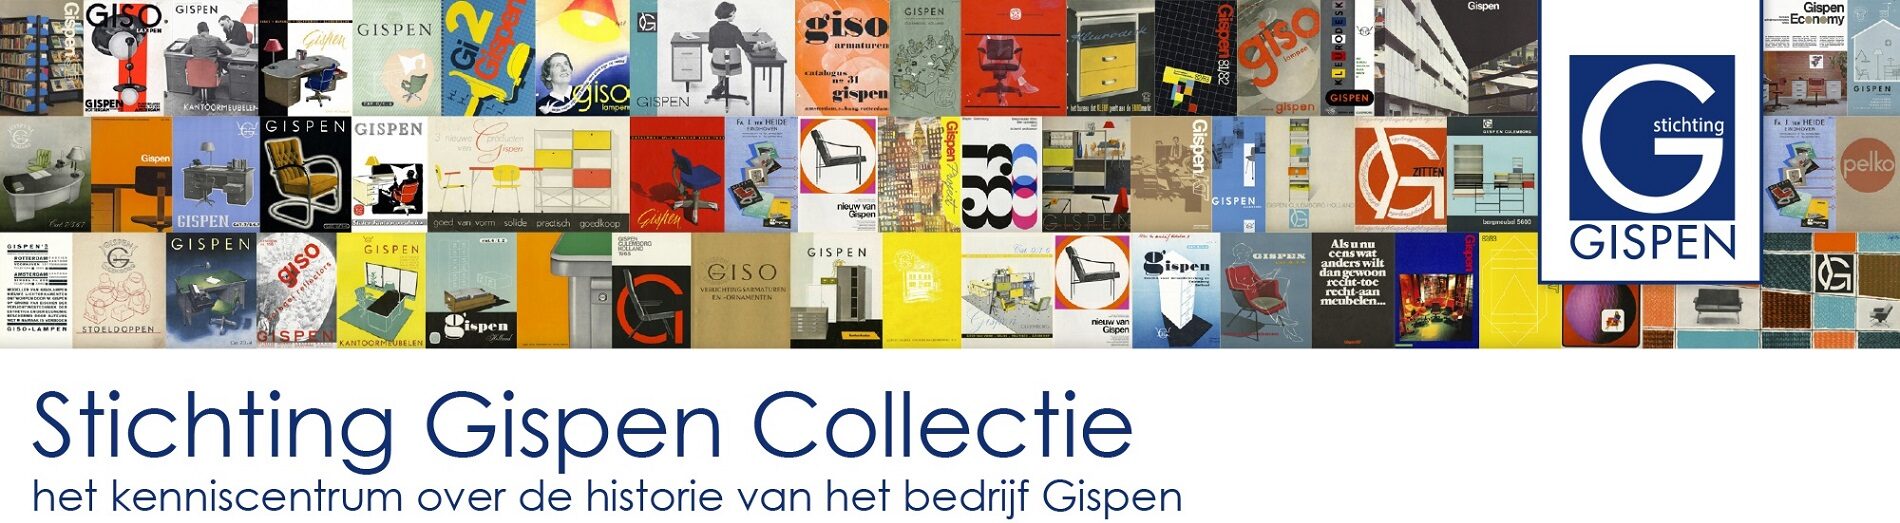 Stichting Gispen Collectie